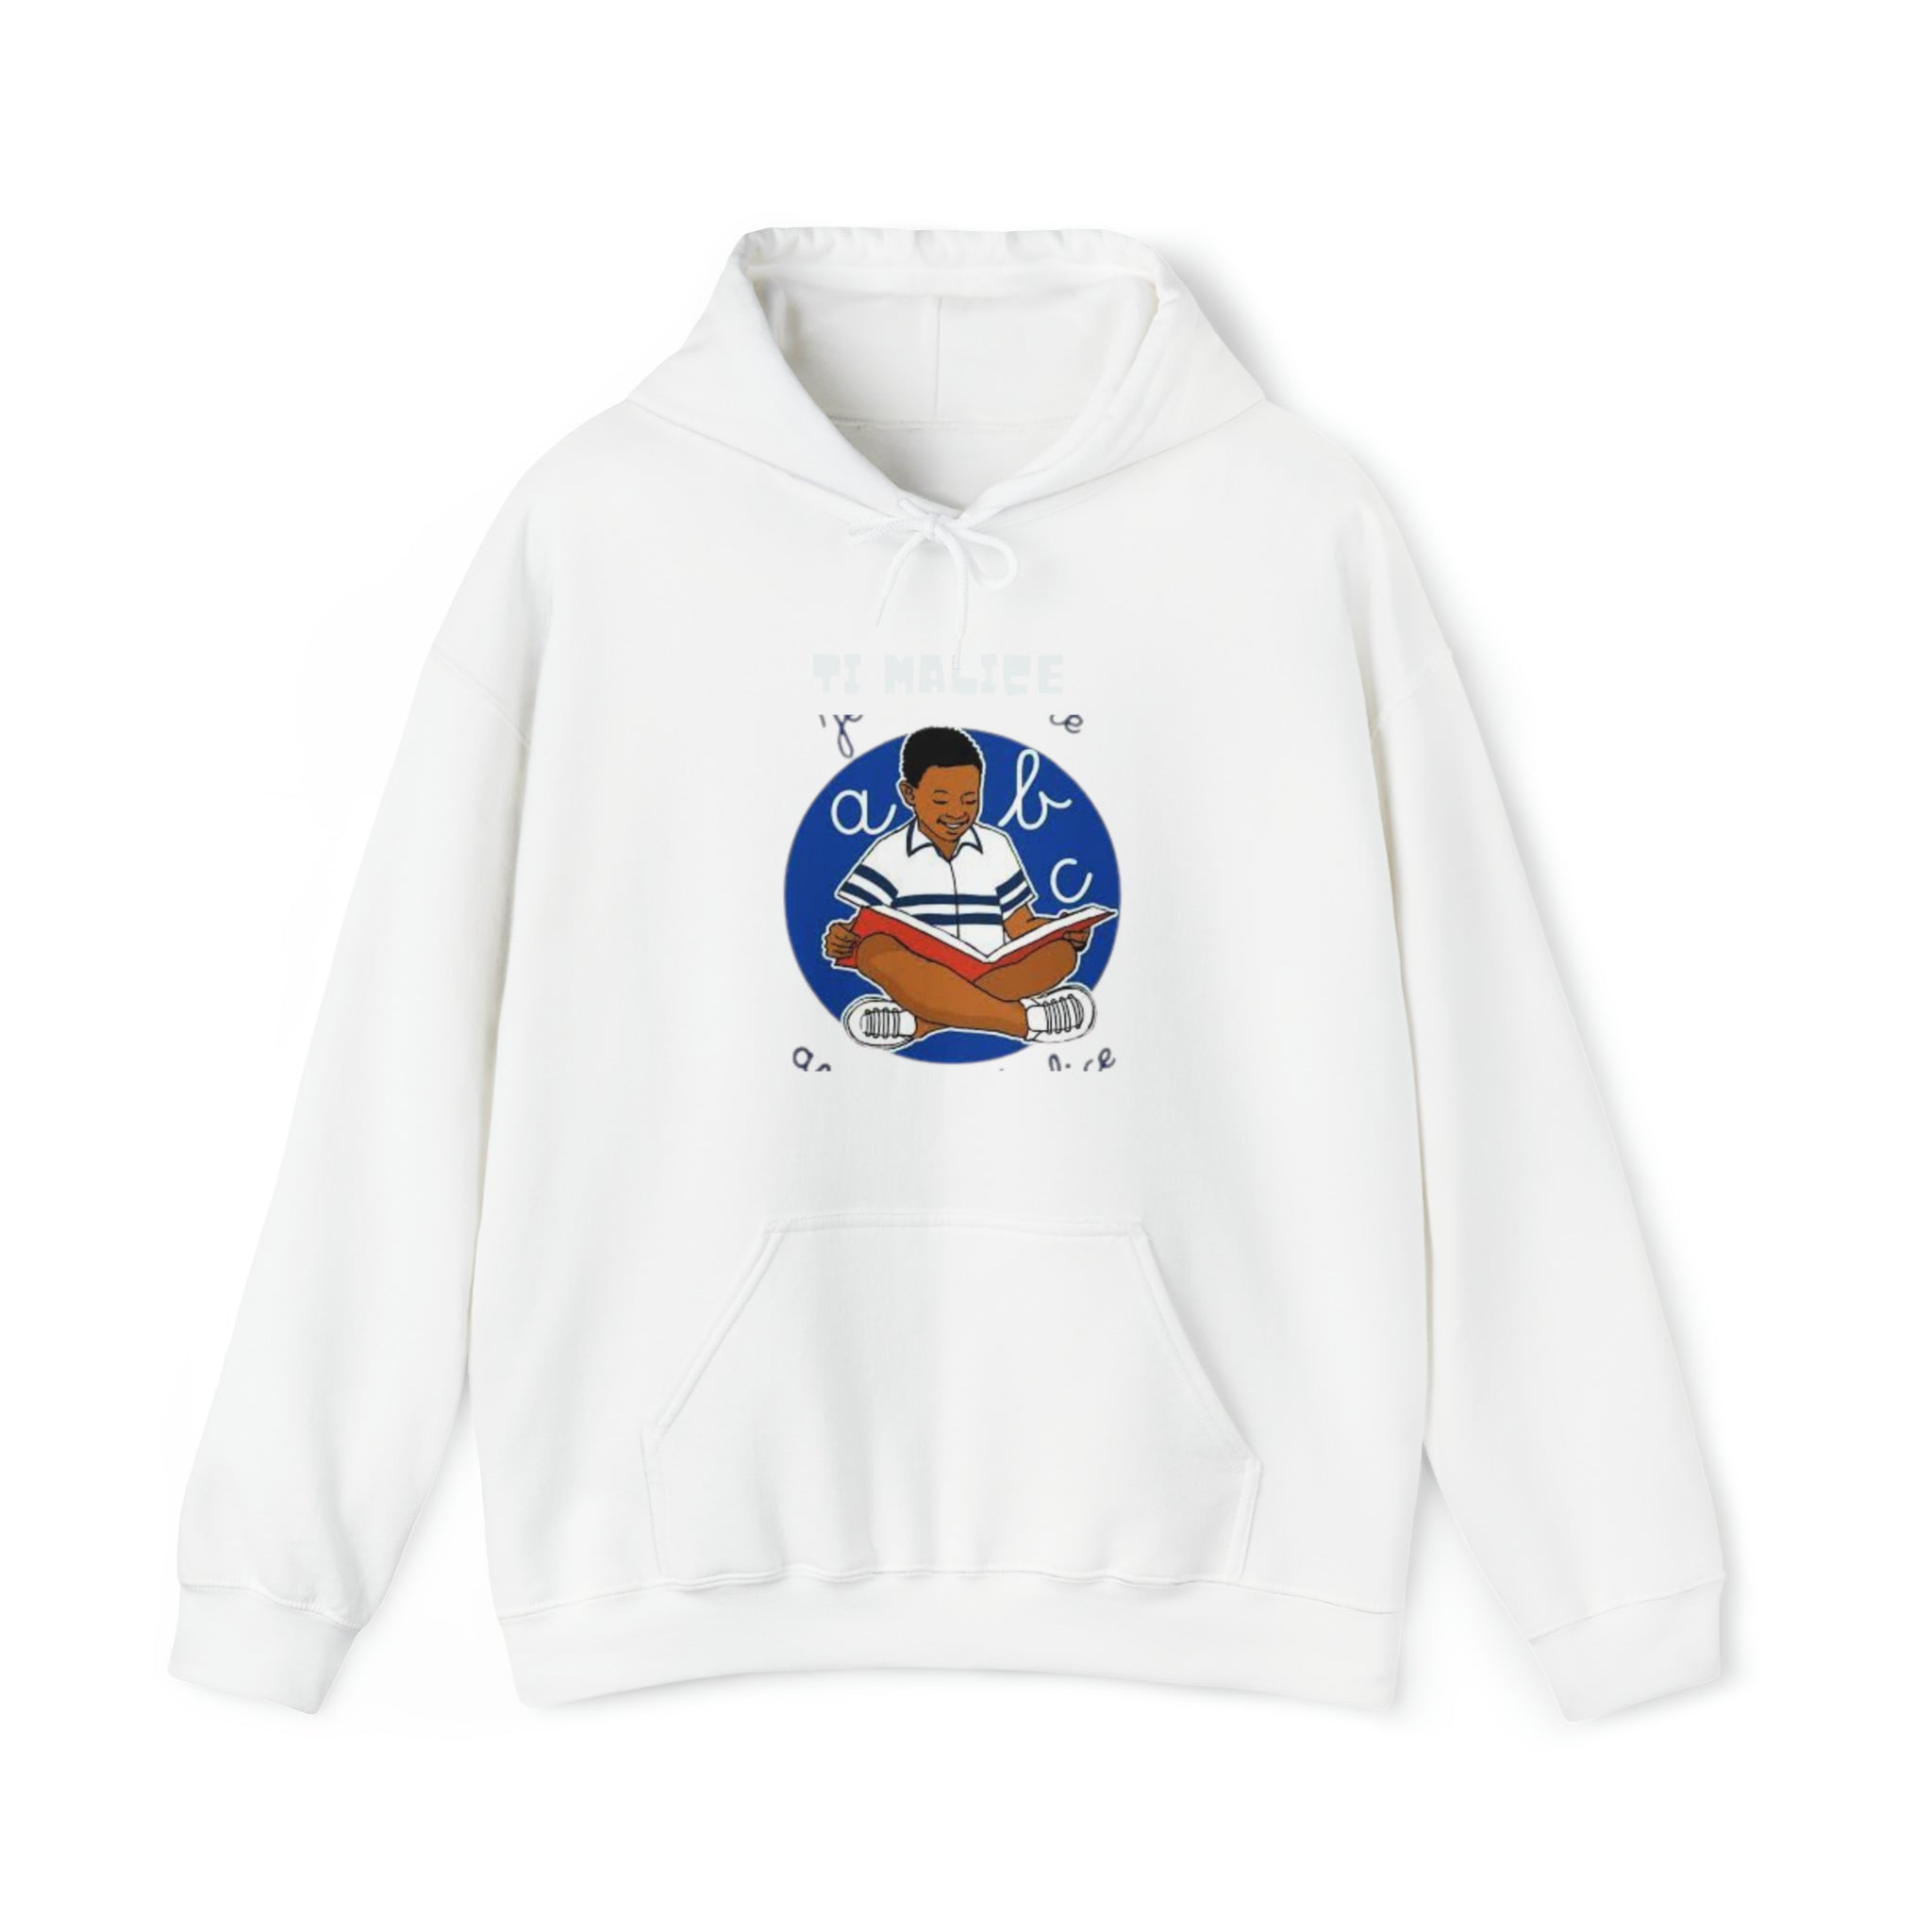 Ti Malice Ayiti-  Unisex Heavy Blend™ Hooded Sweatshirt